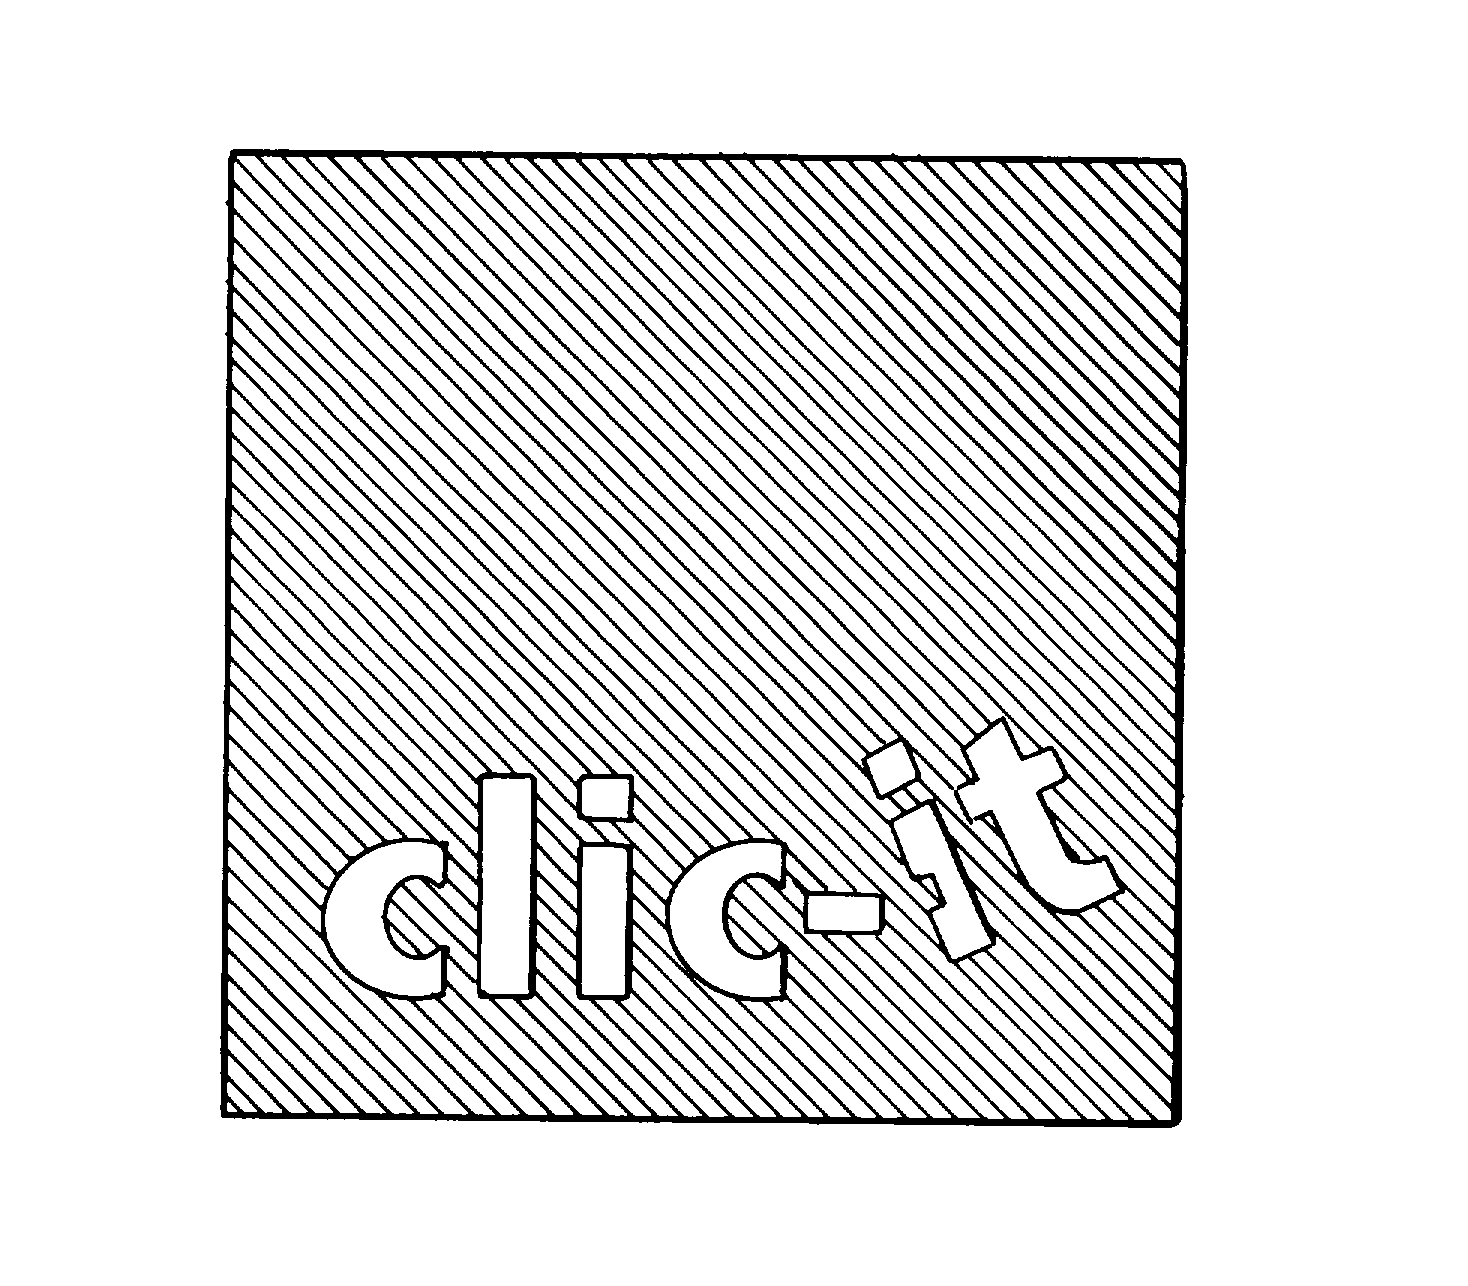 CLIC-IT